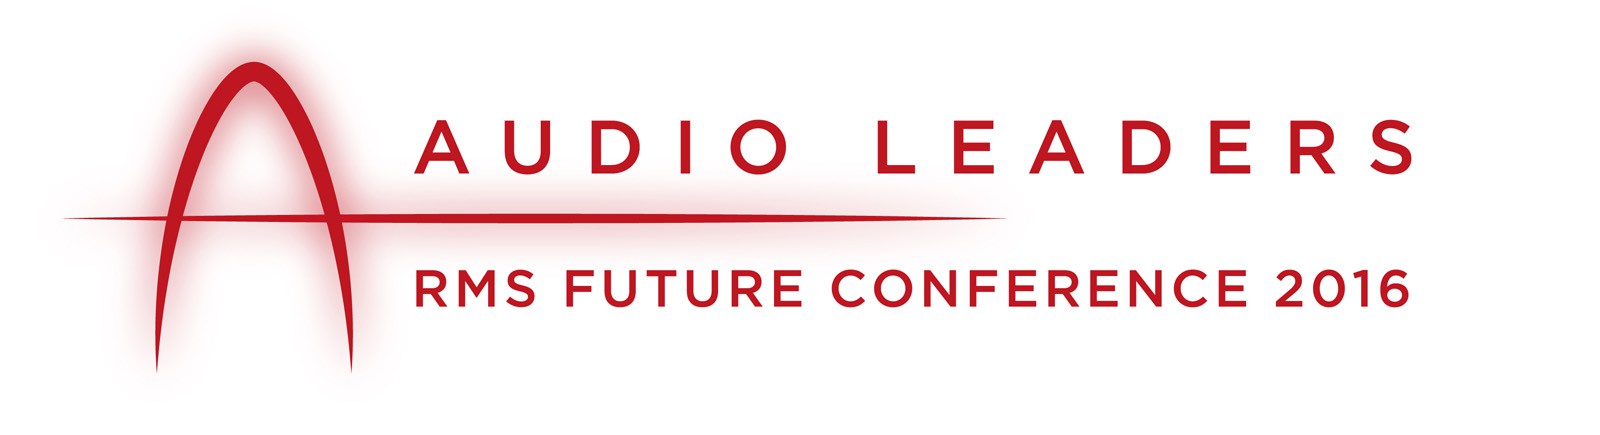 Die Neuen - AUDIO LEADERS RMS FUTURE CONFERENCE 2016